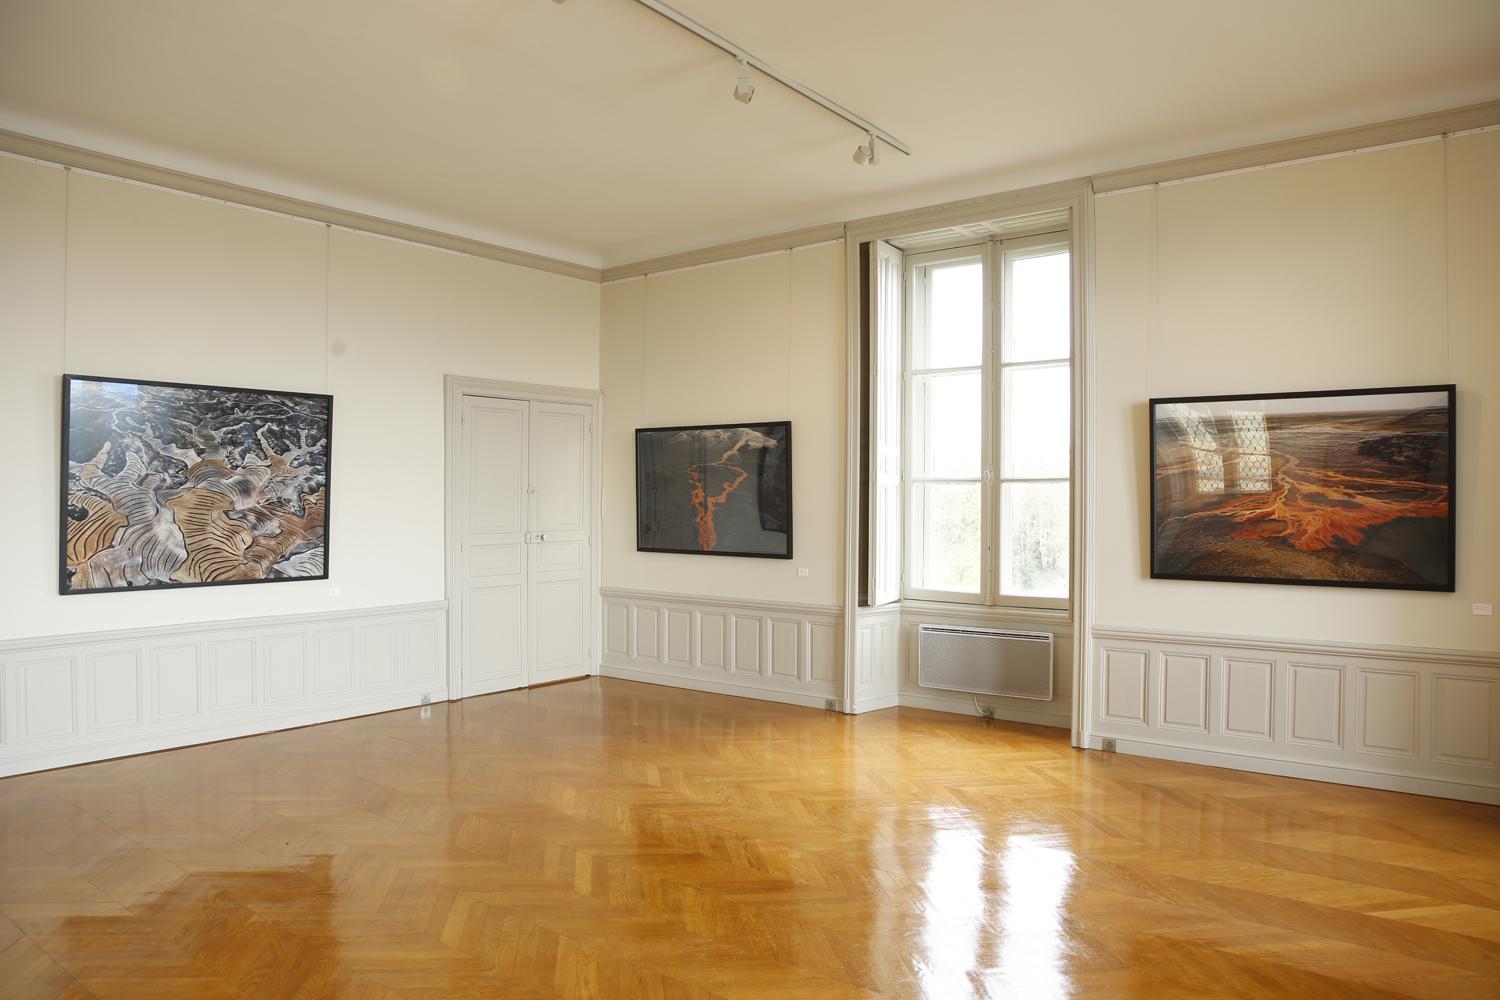 Edward Burtynsky - Robert Koch Gallery - Gallery Artist - Photographer